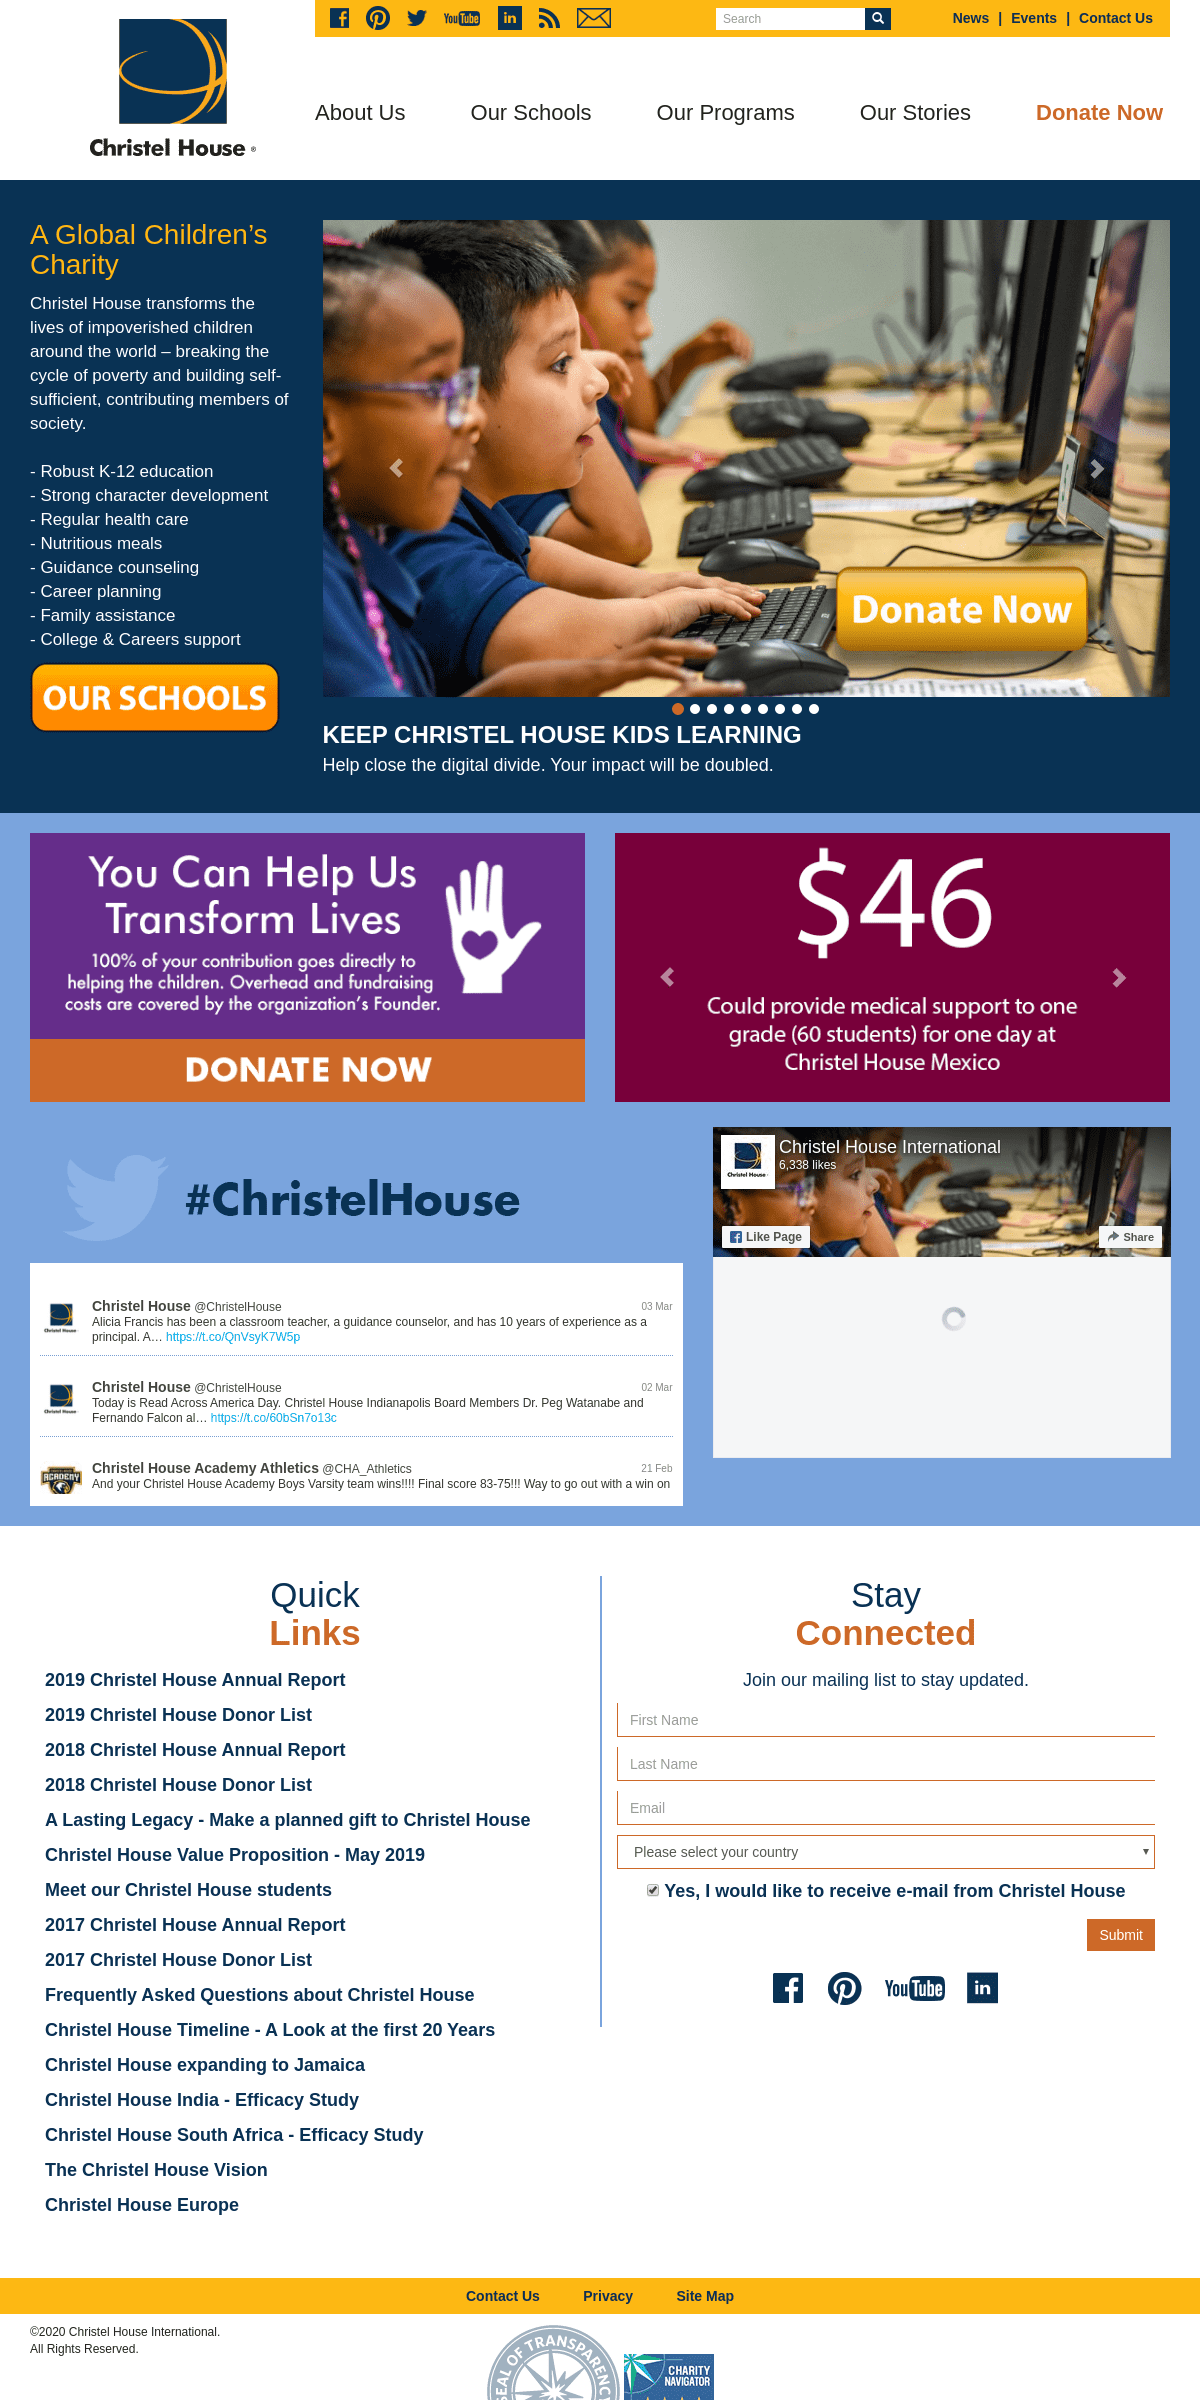 A complete backup of christelhouse.org